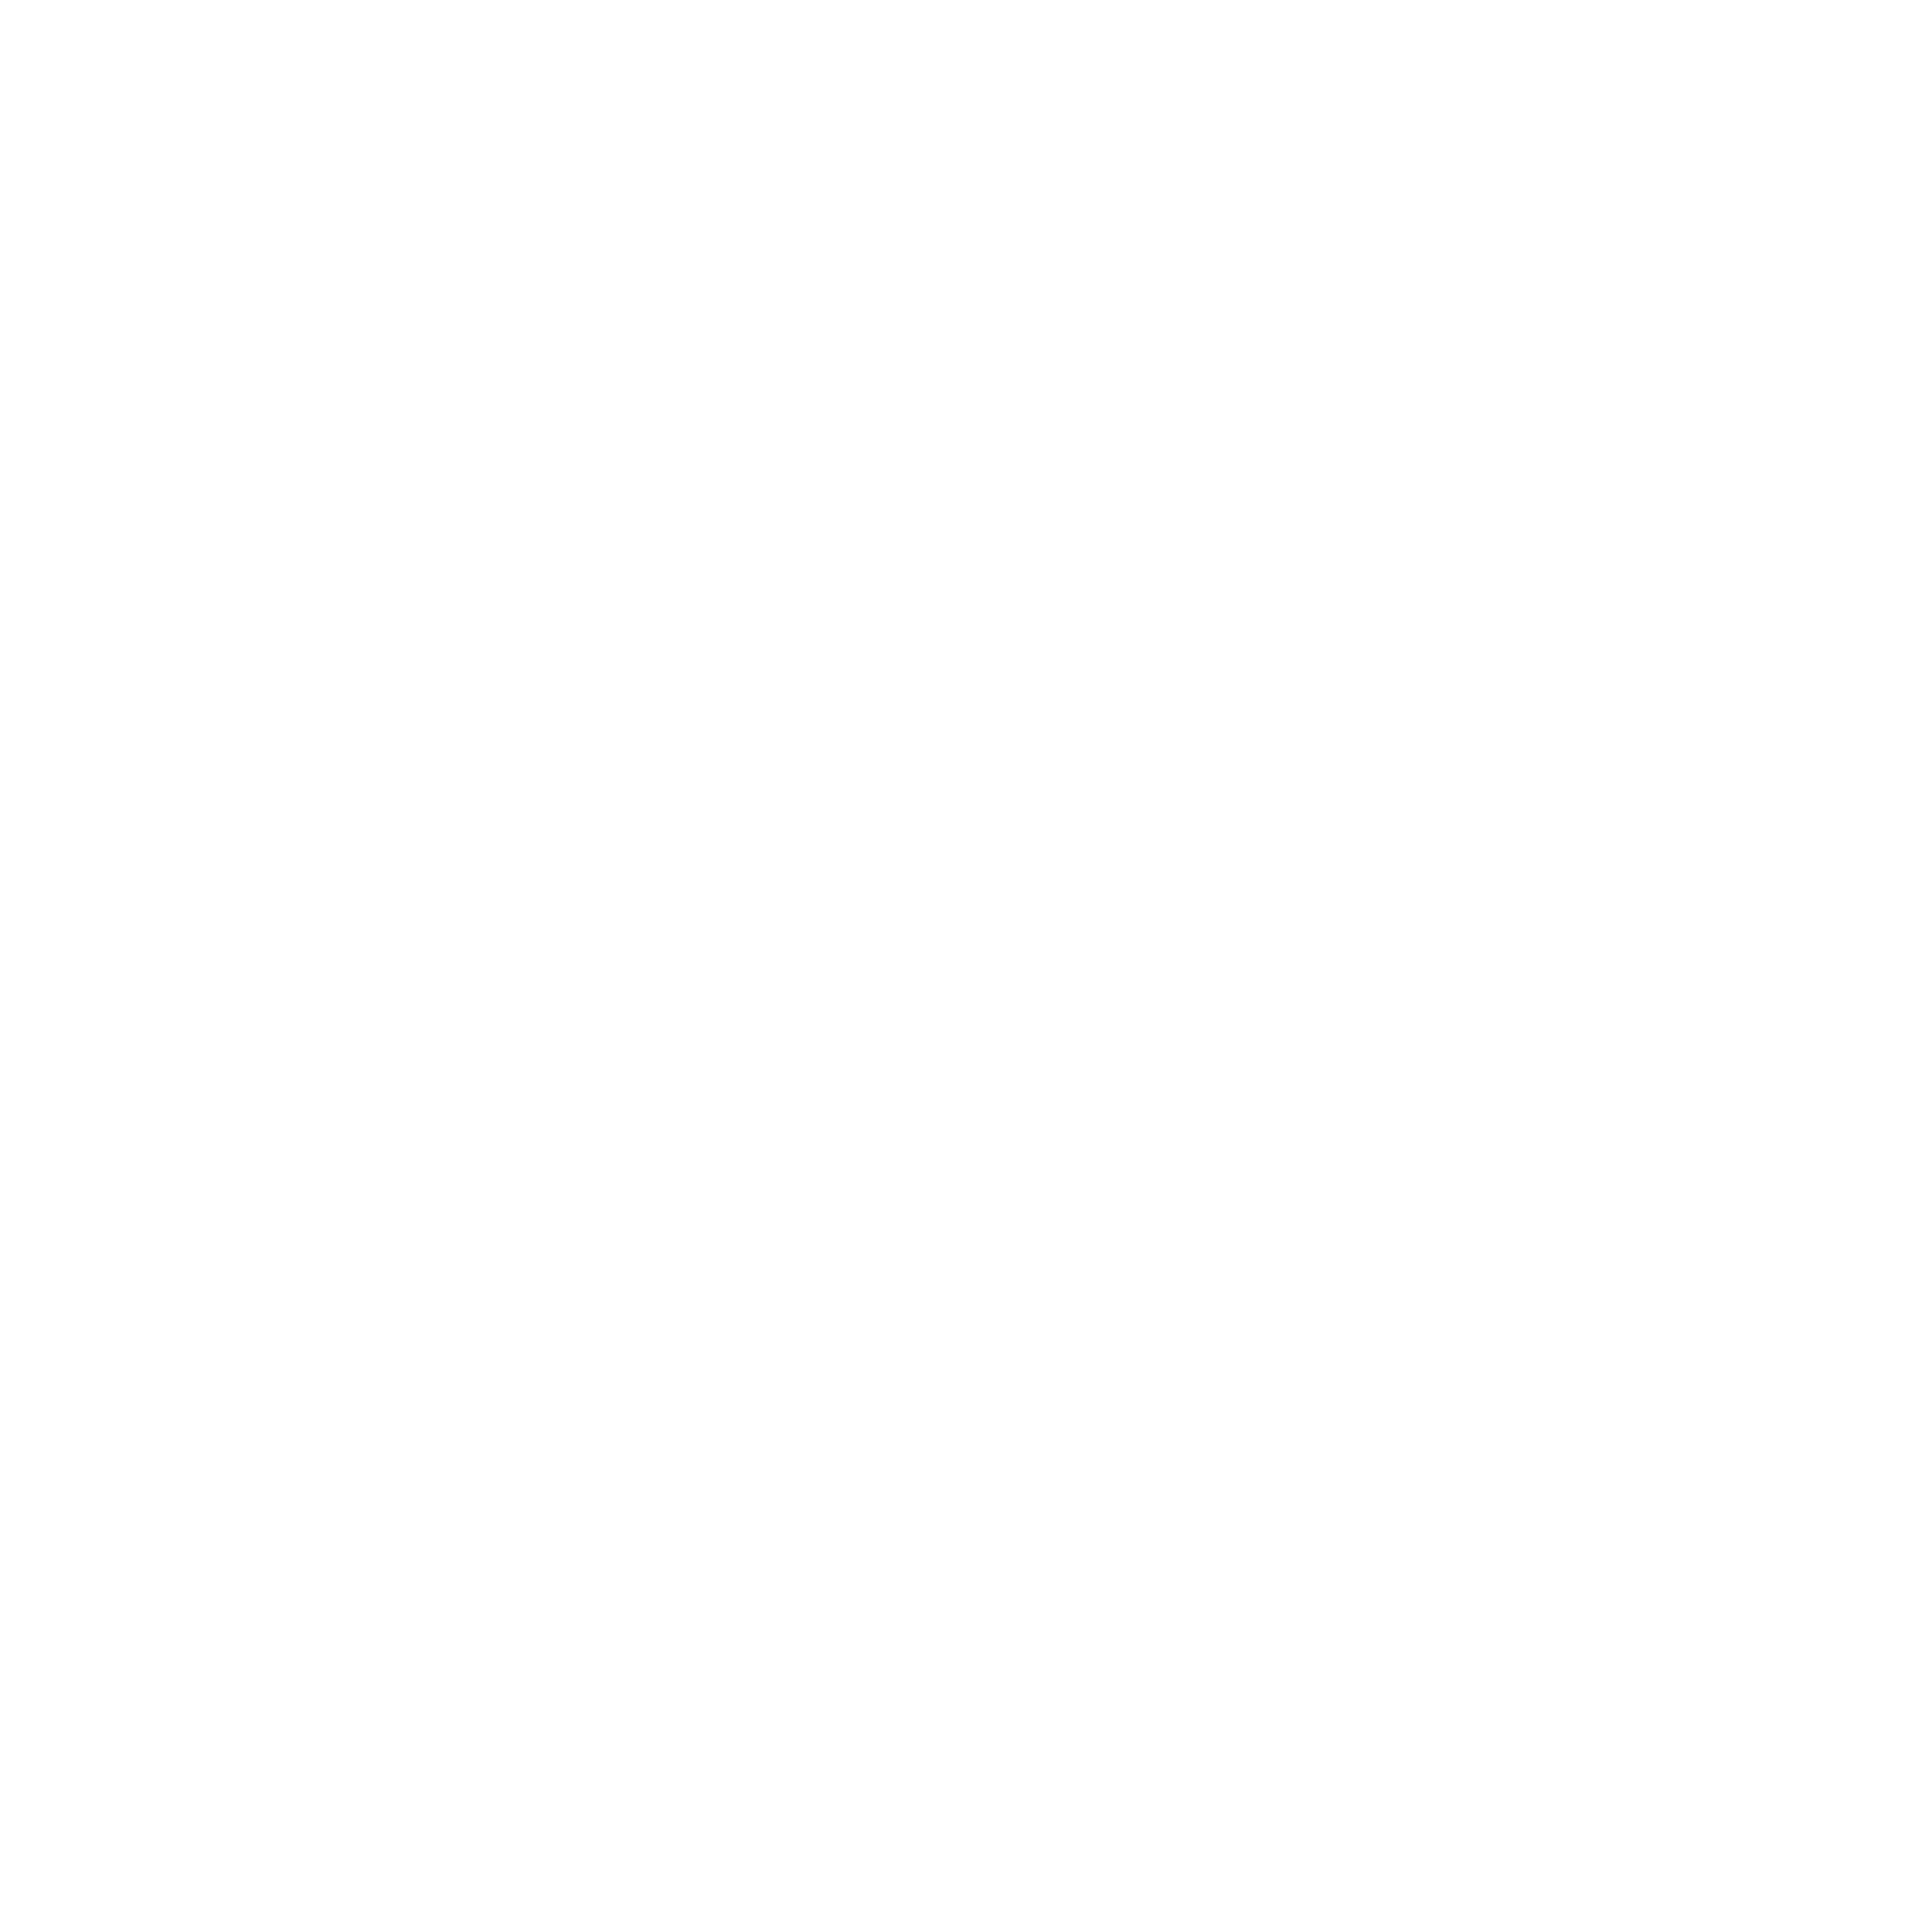 National Guard Logo - TMD Branding - Texas Military Department